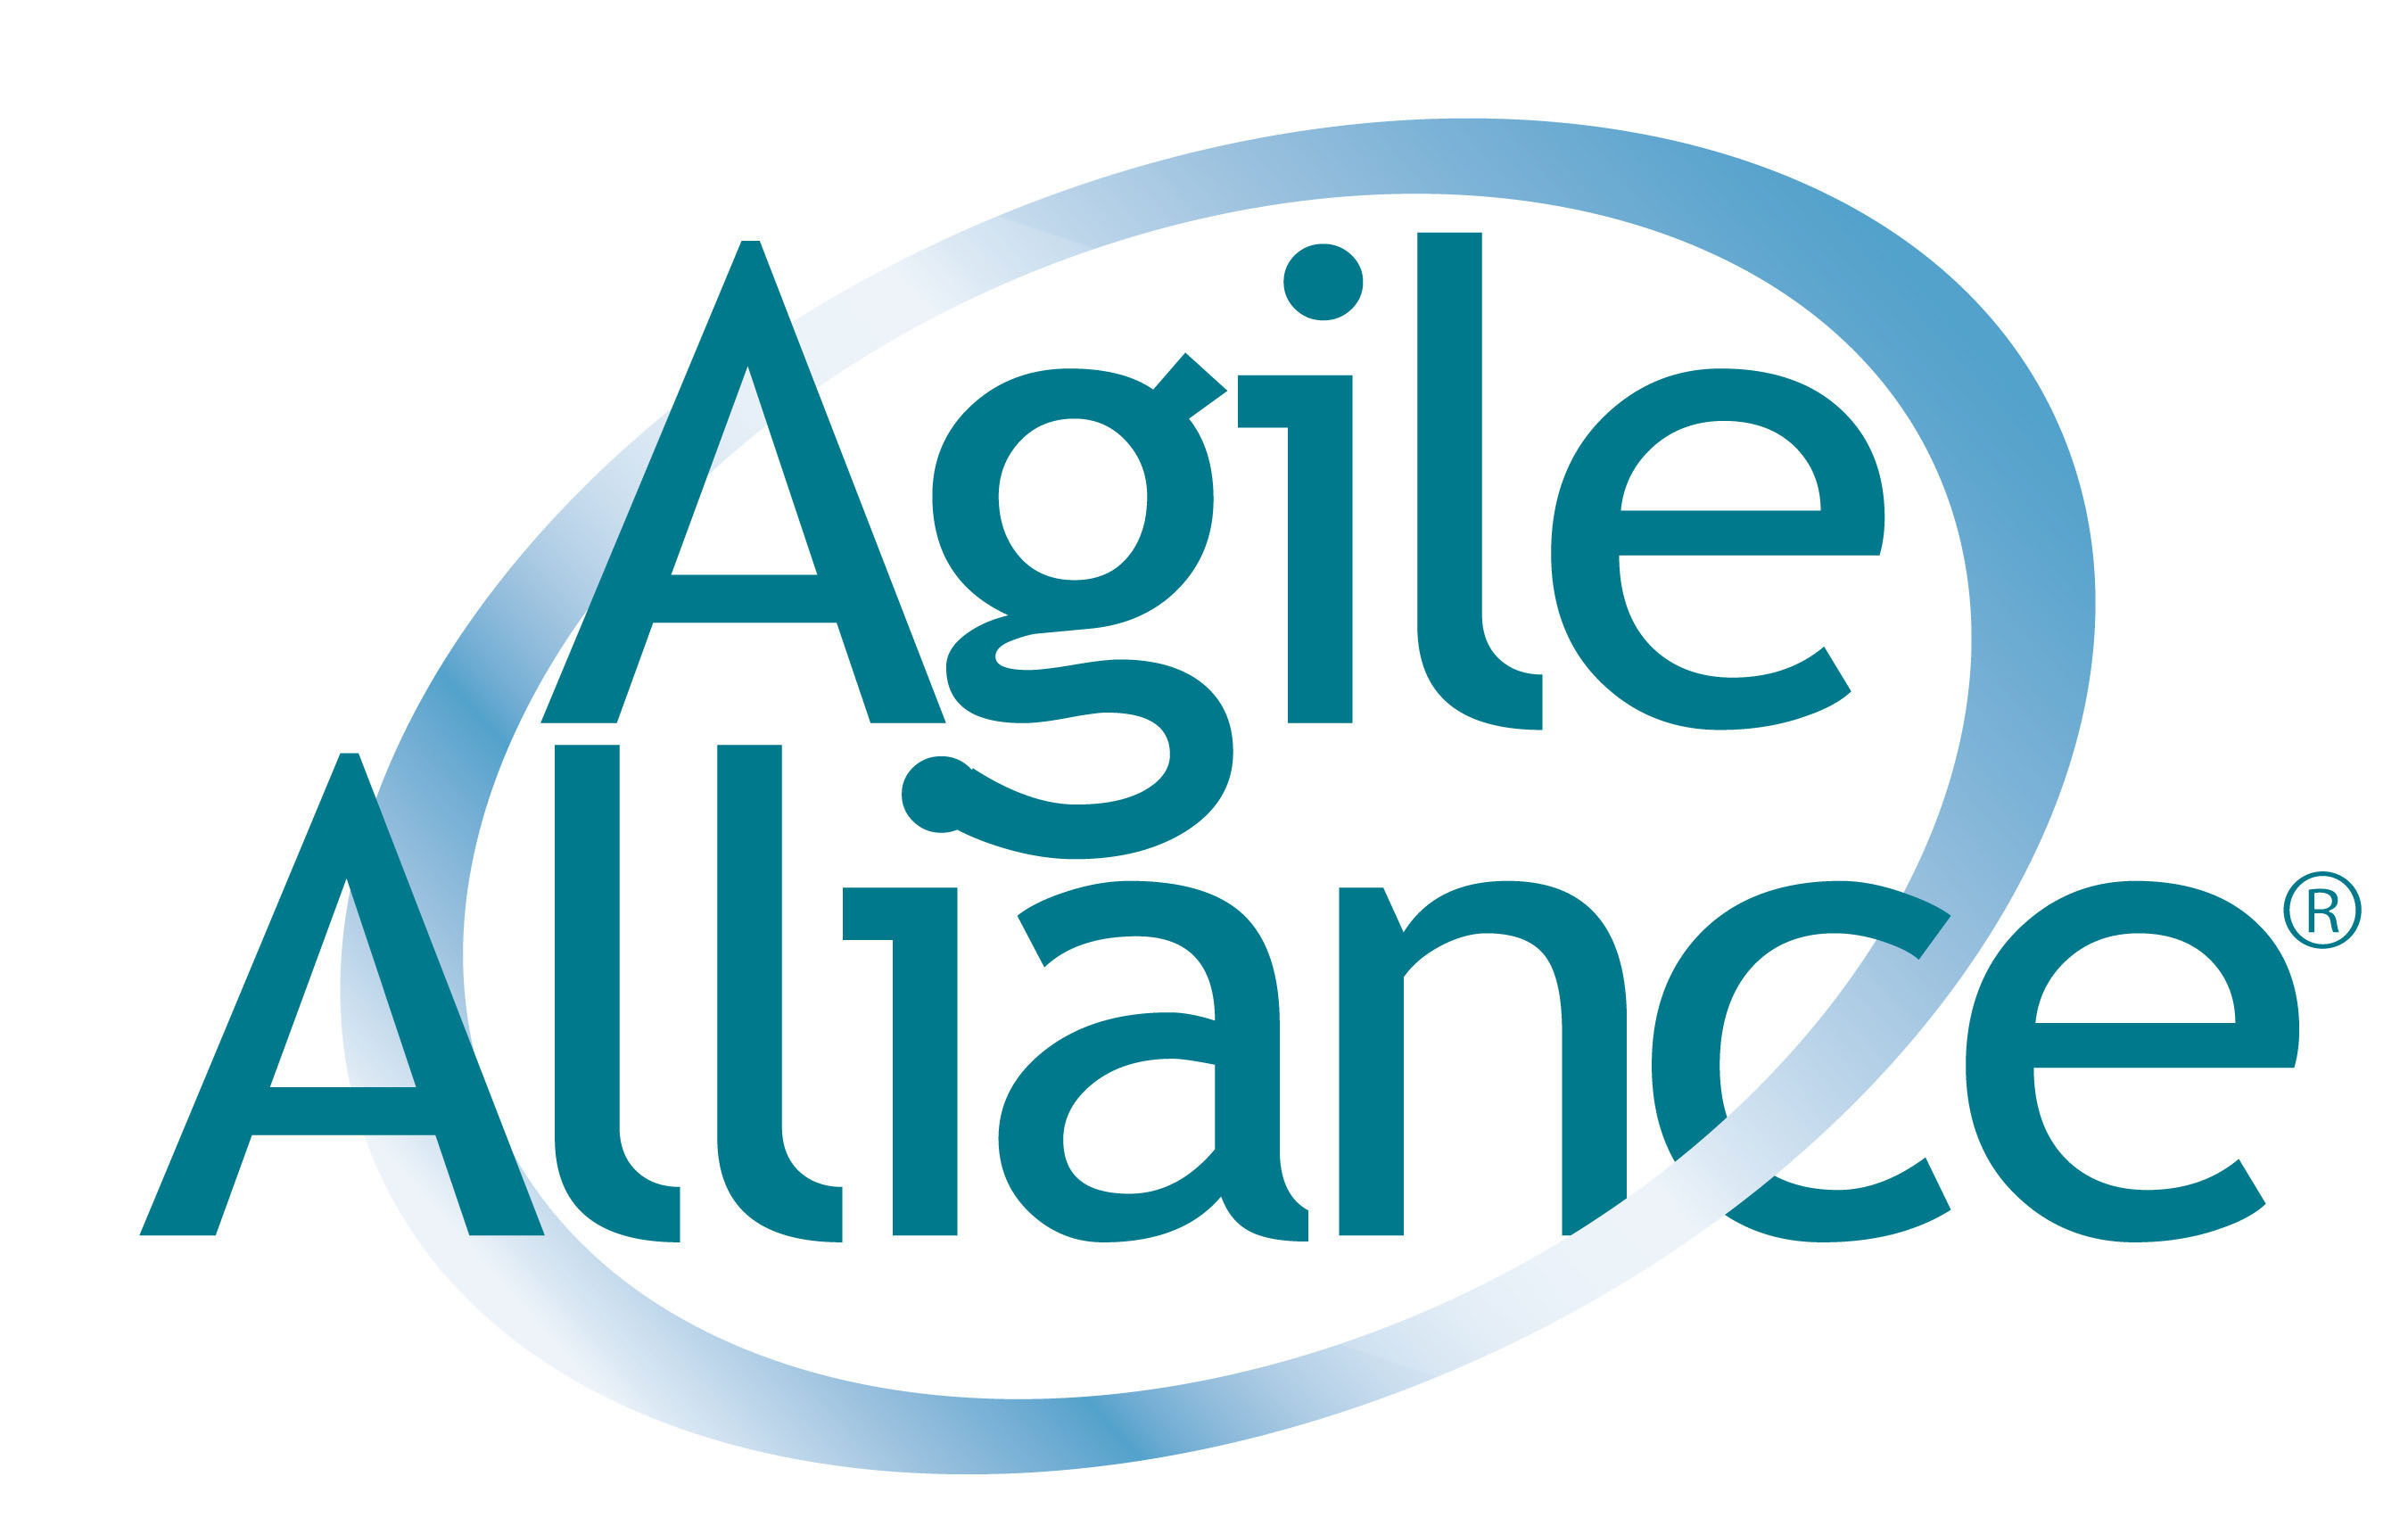 Agile Alliance logo